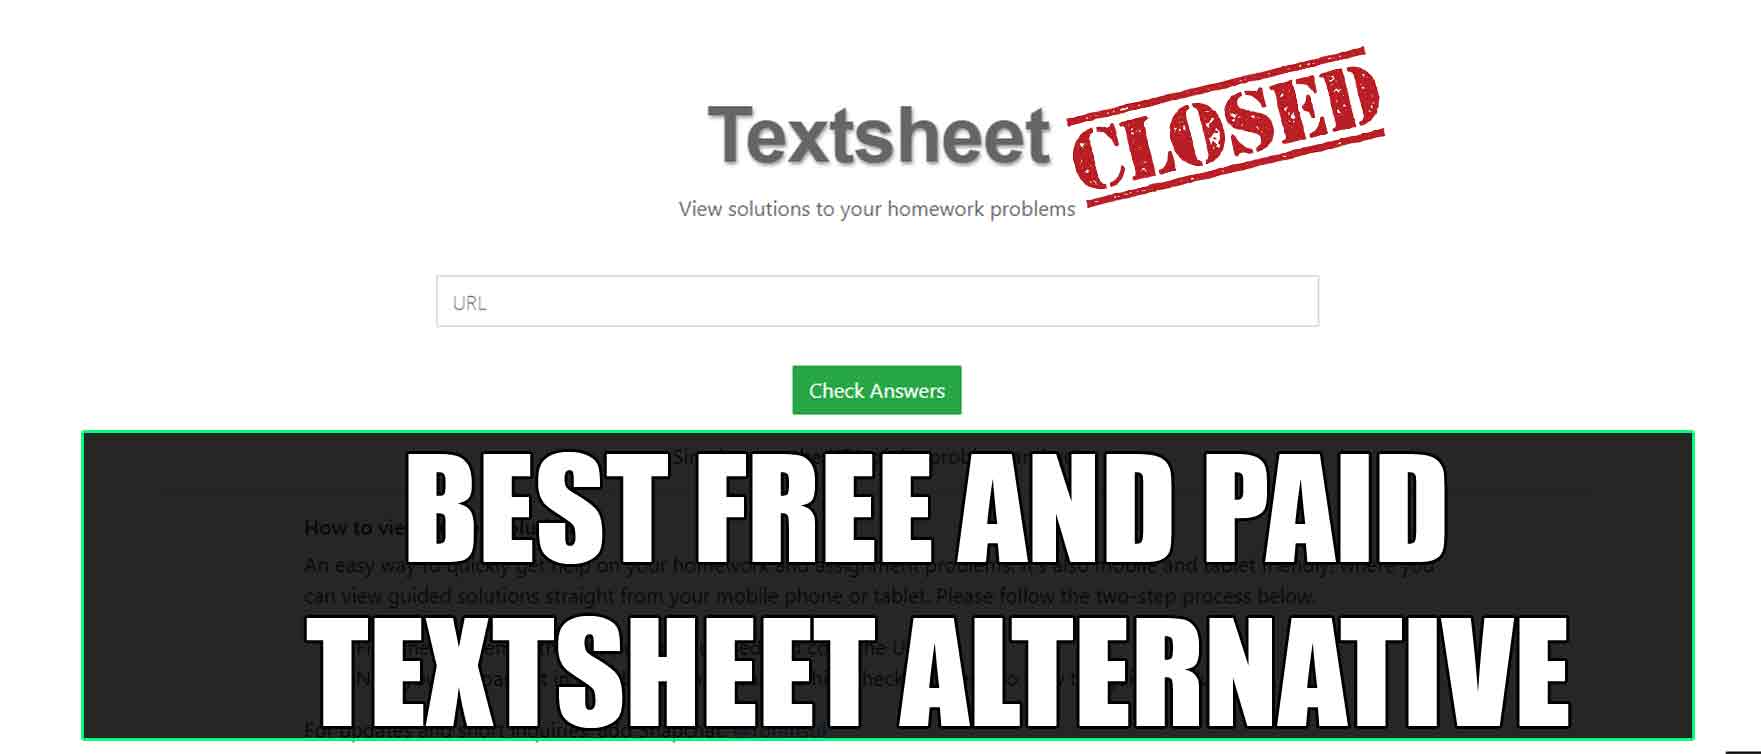 textsheet-alternative